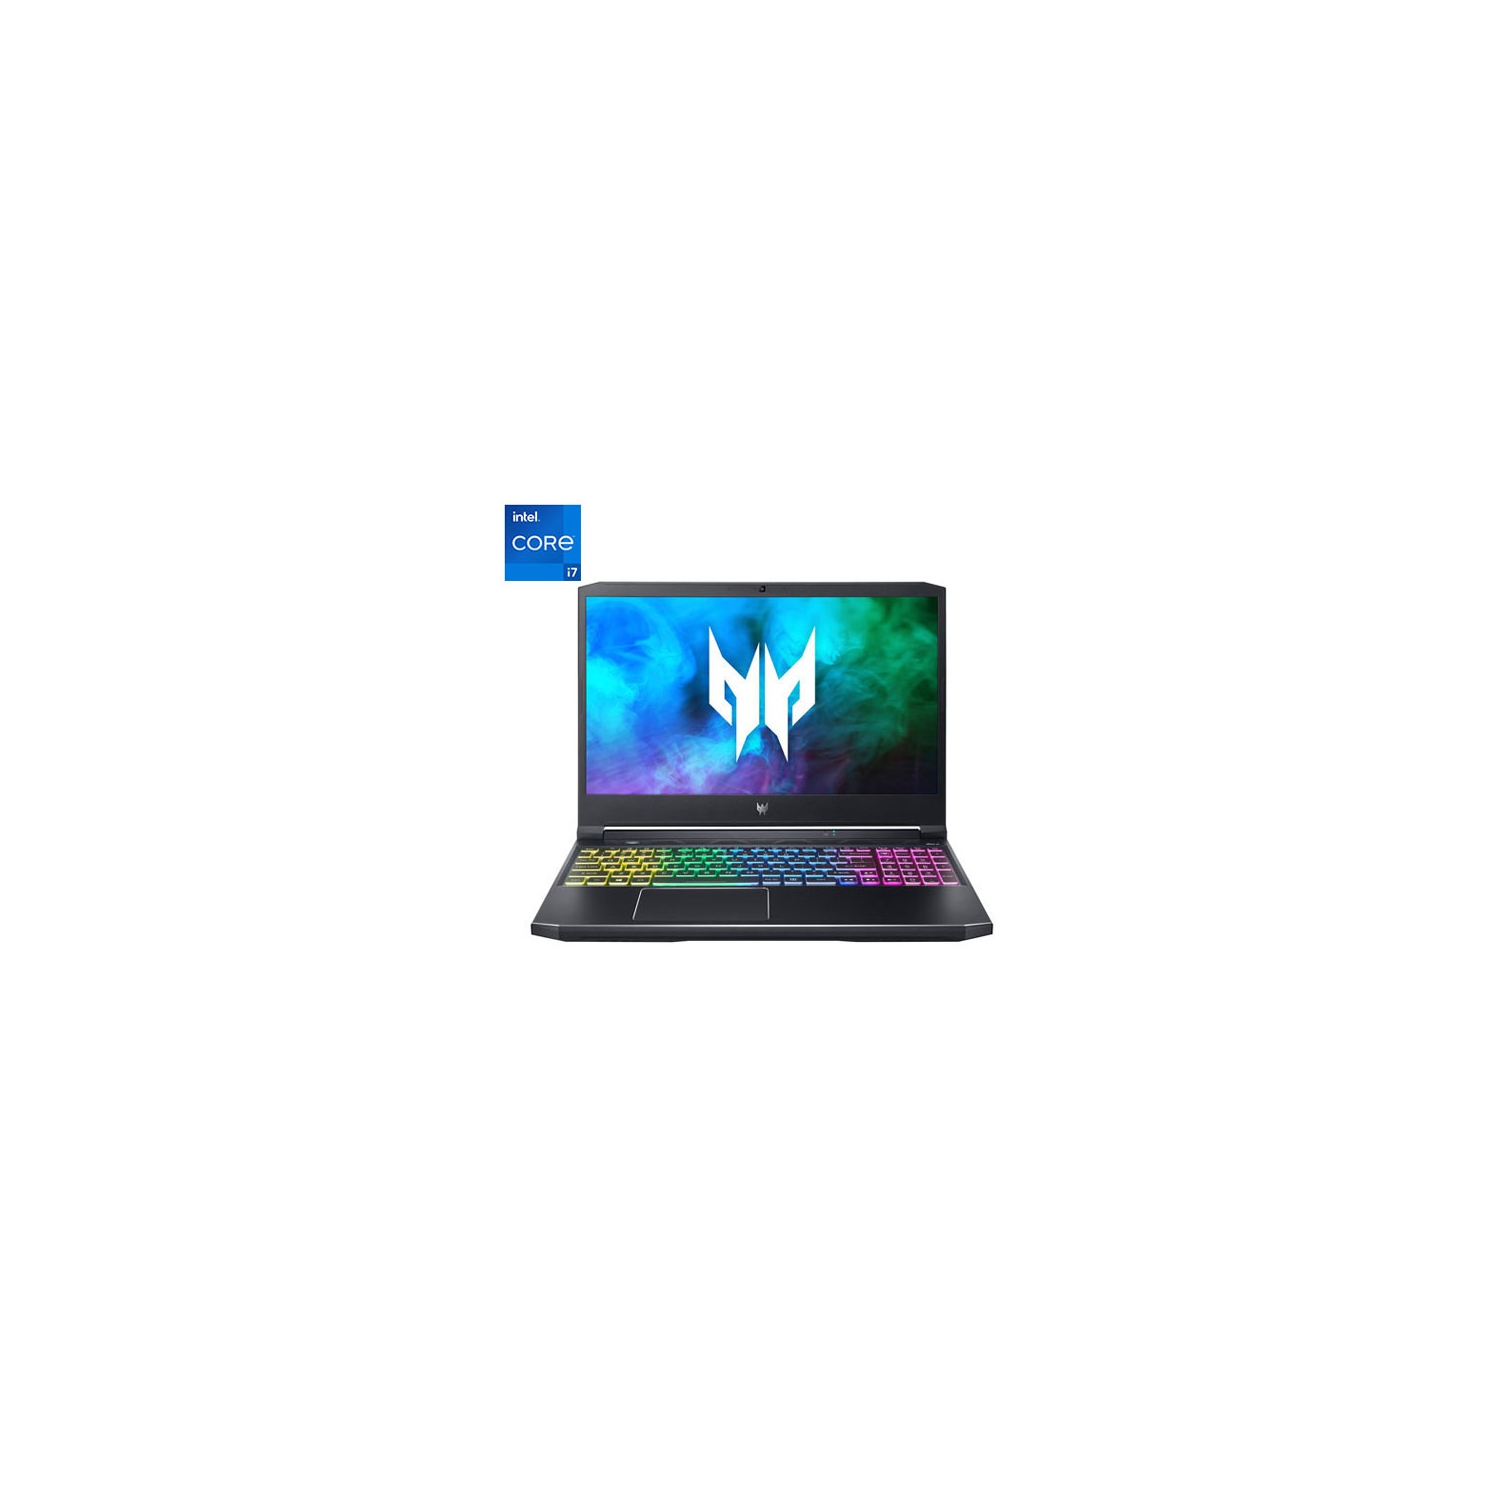 Acer 15.6" Gaming Laptop (Intel Core i7-11800H/1TB SSD/16GB RAM/GeForce RTX 3060/Windows 10) - Open Box